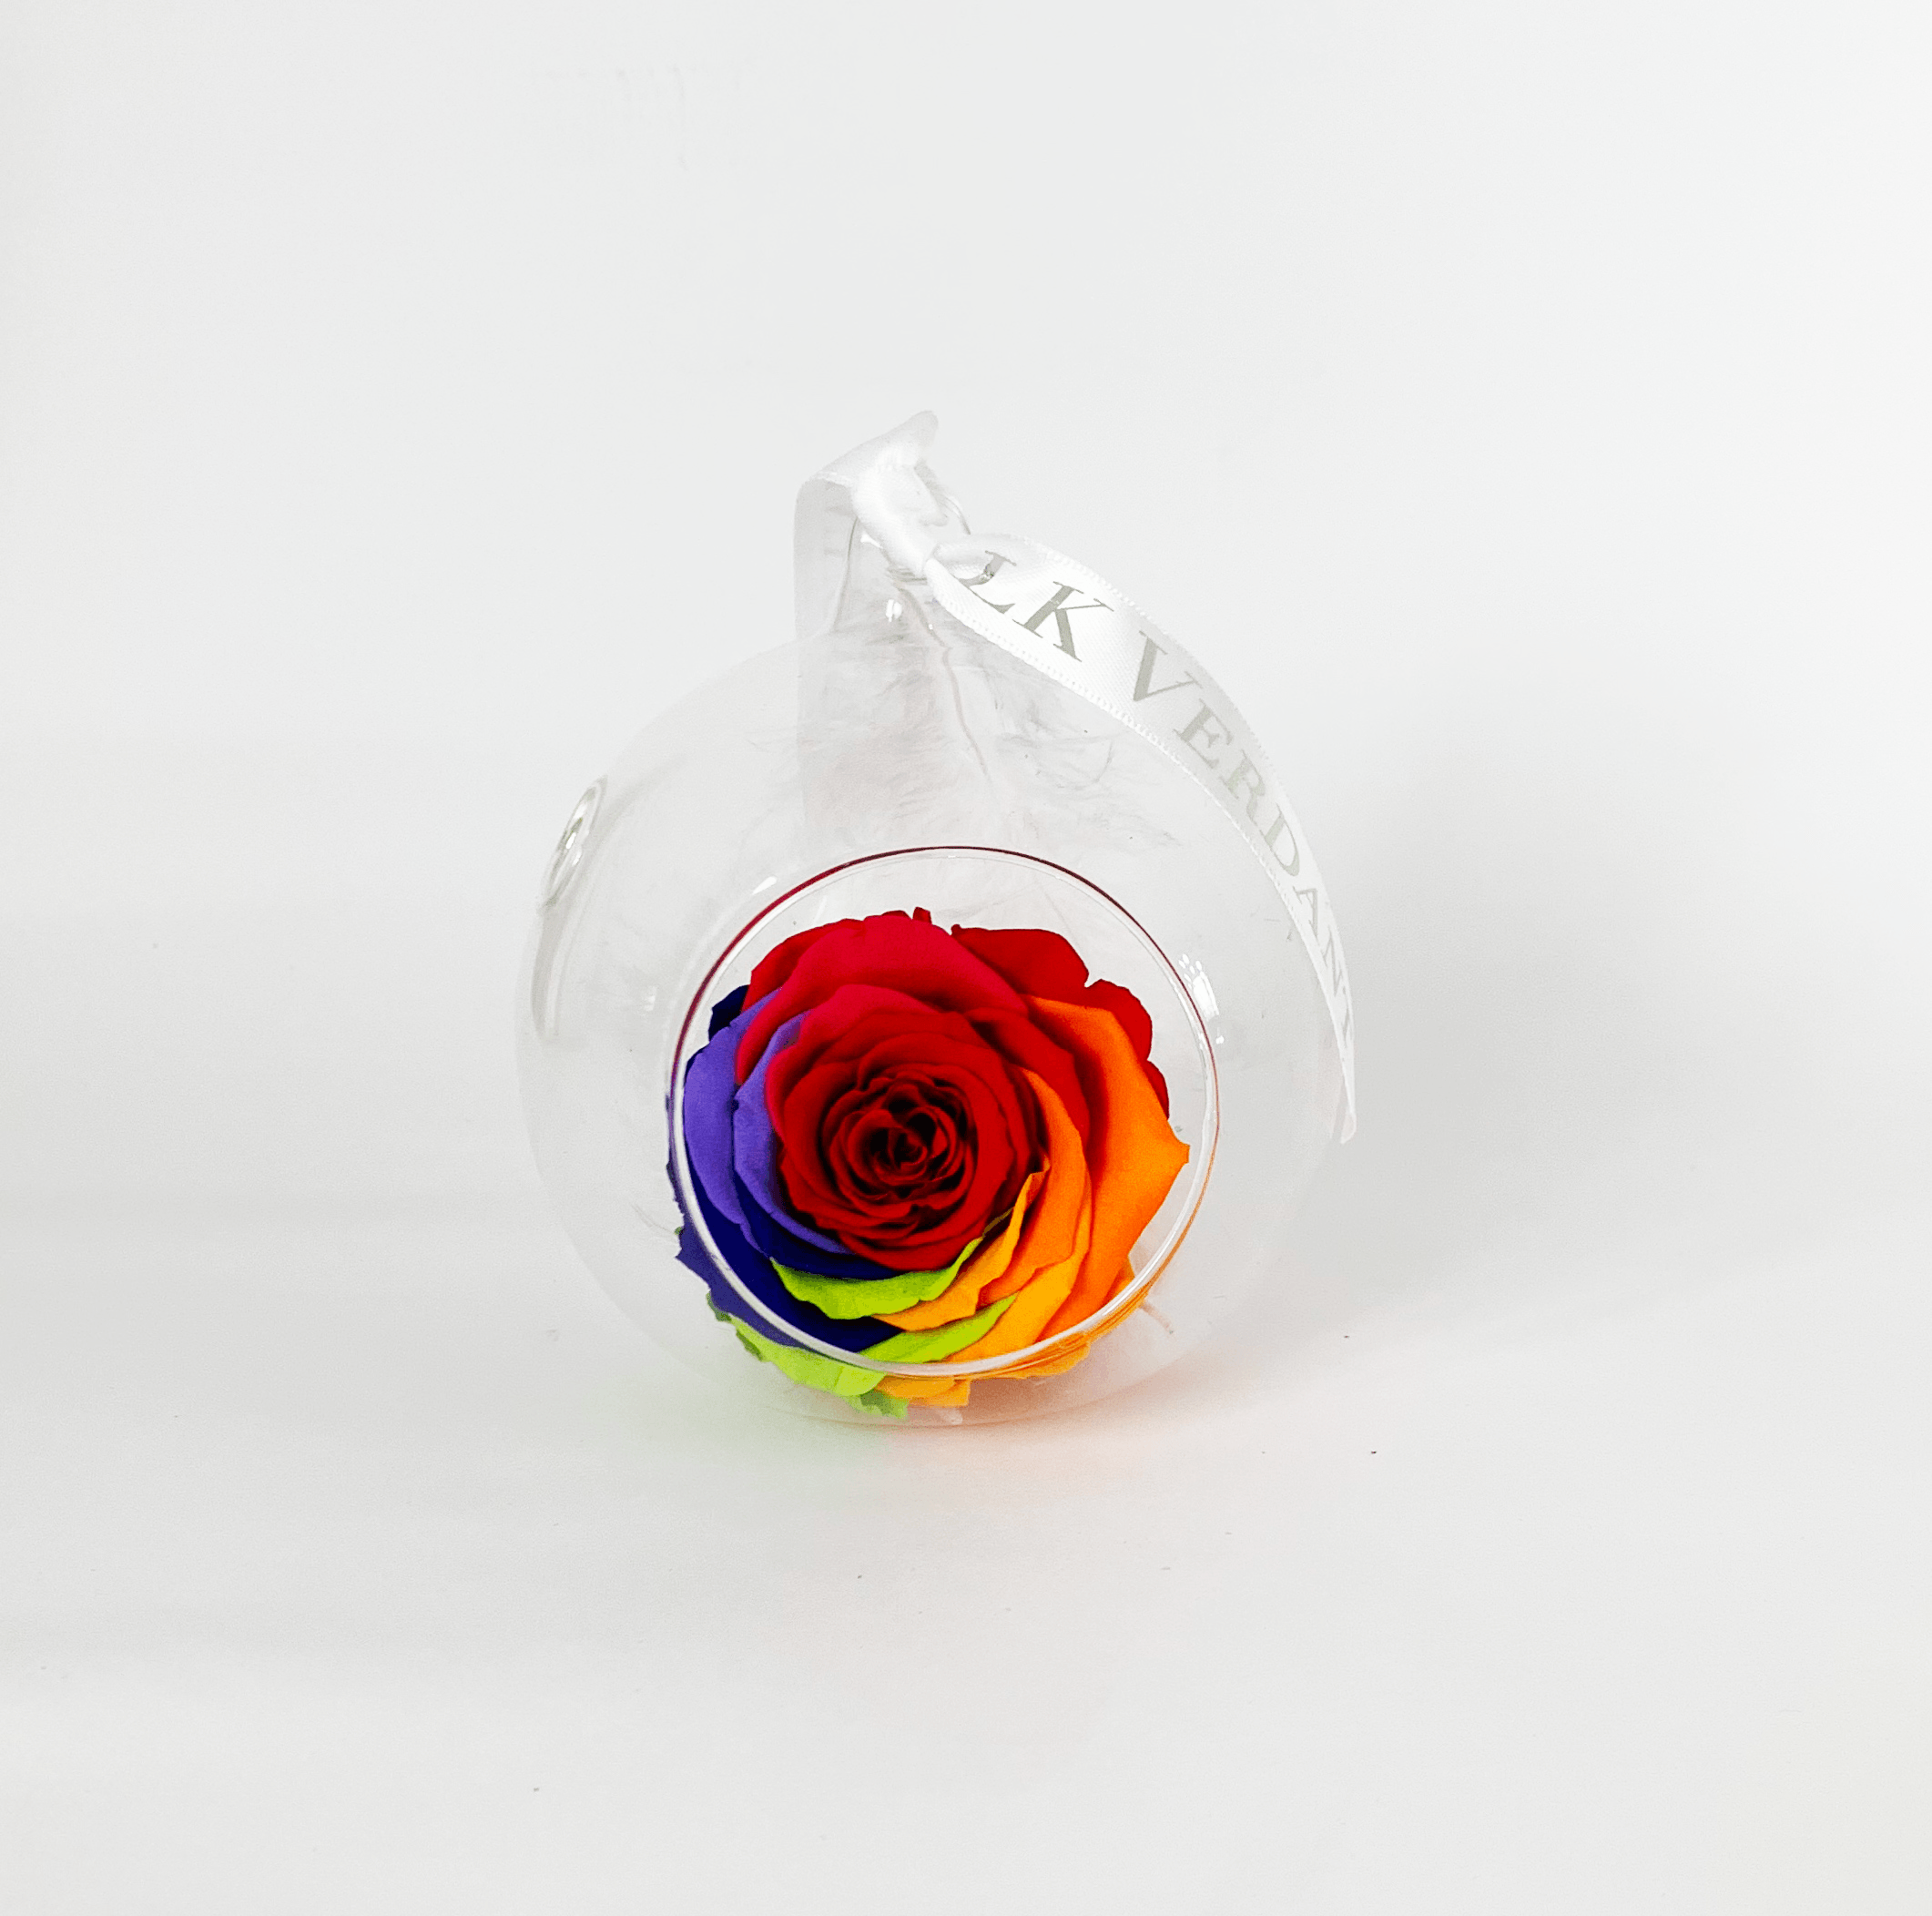 The Always Rainbow Forever Rose - Shop for Flowers and Forever Roses - LK VERDANT